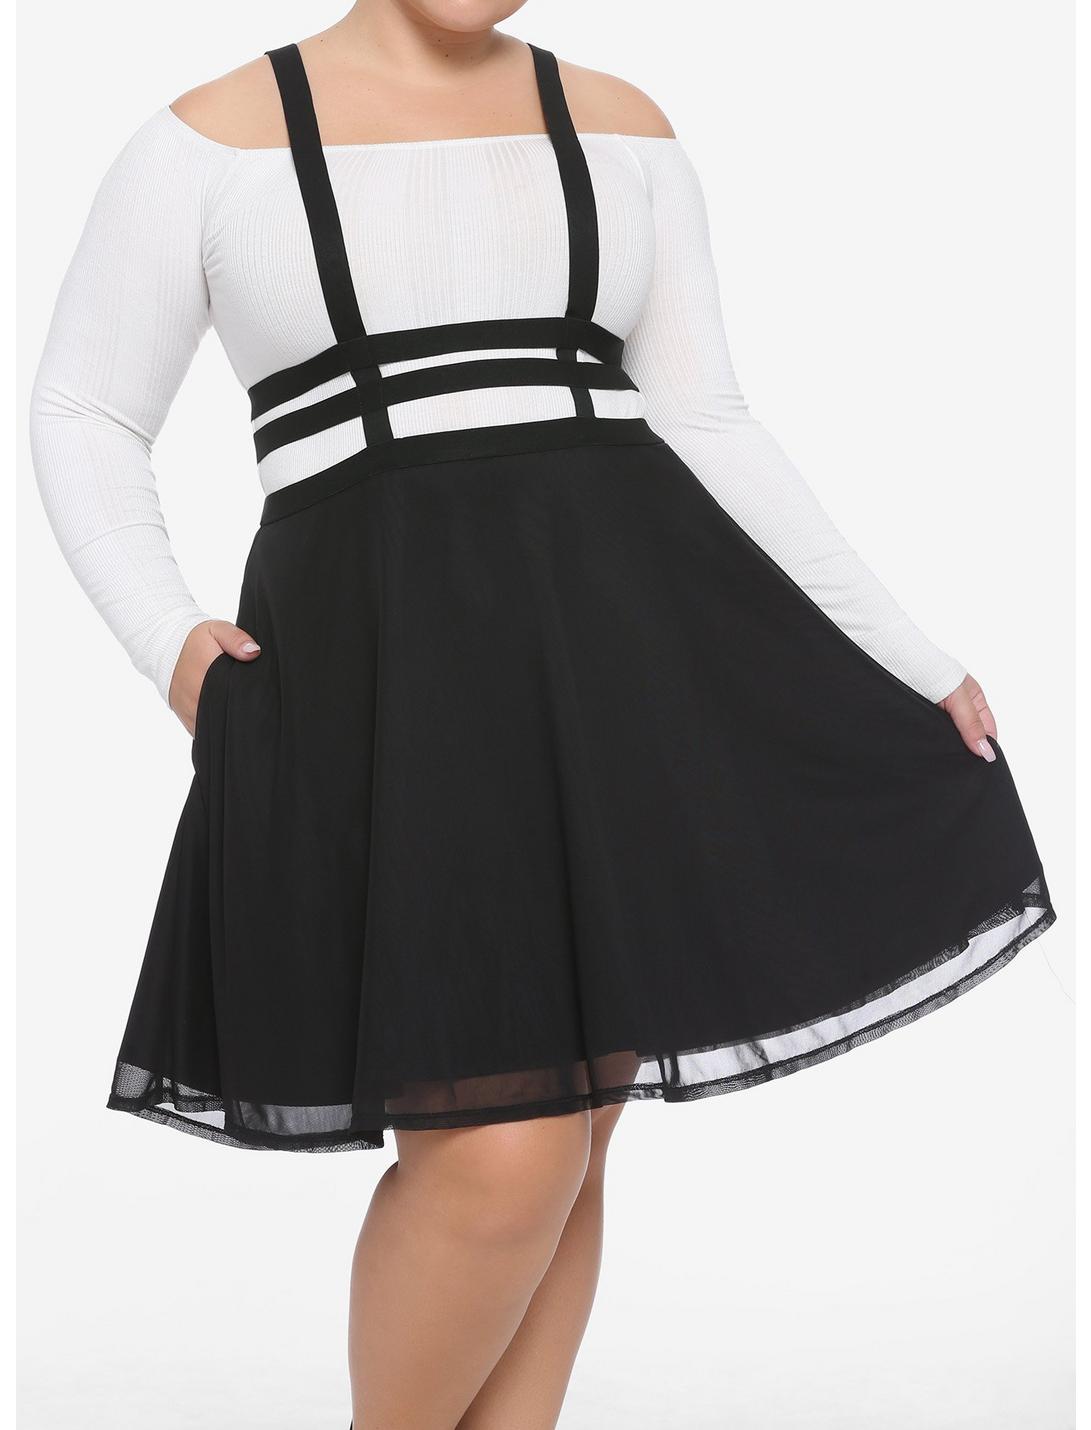 Black Cage & Mesh Suspender Skirt Plus Size, BLACK, hi-res